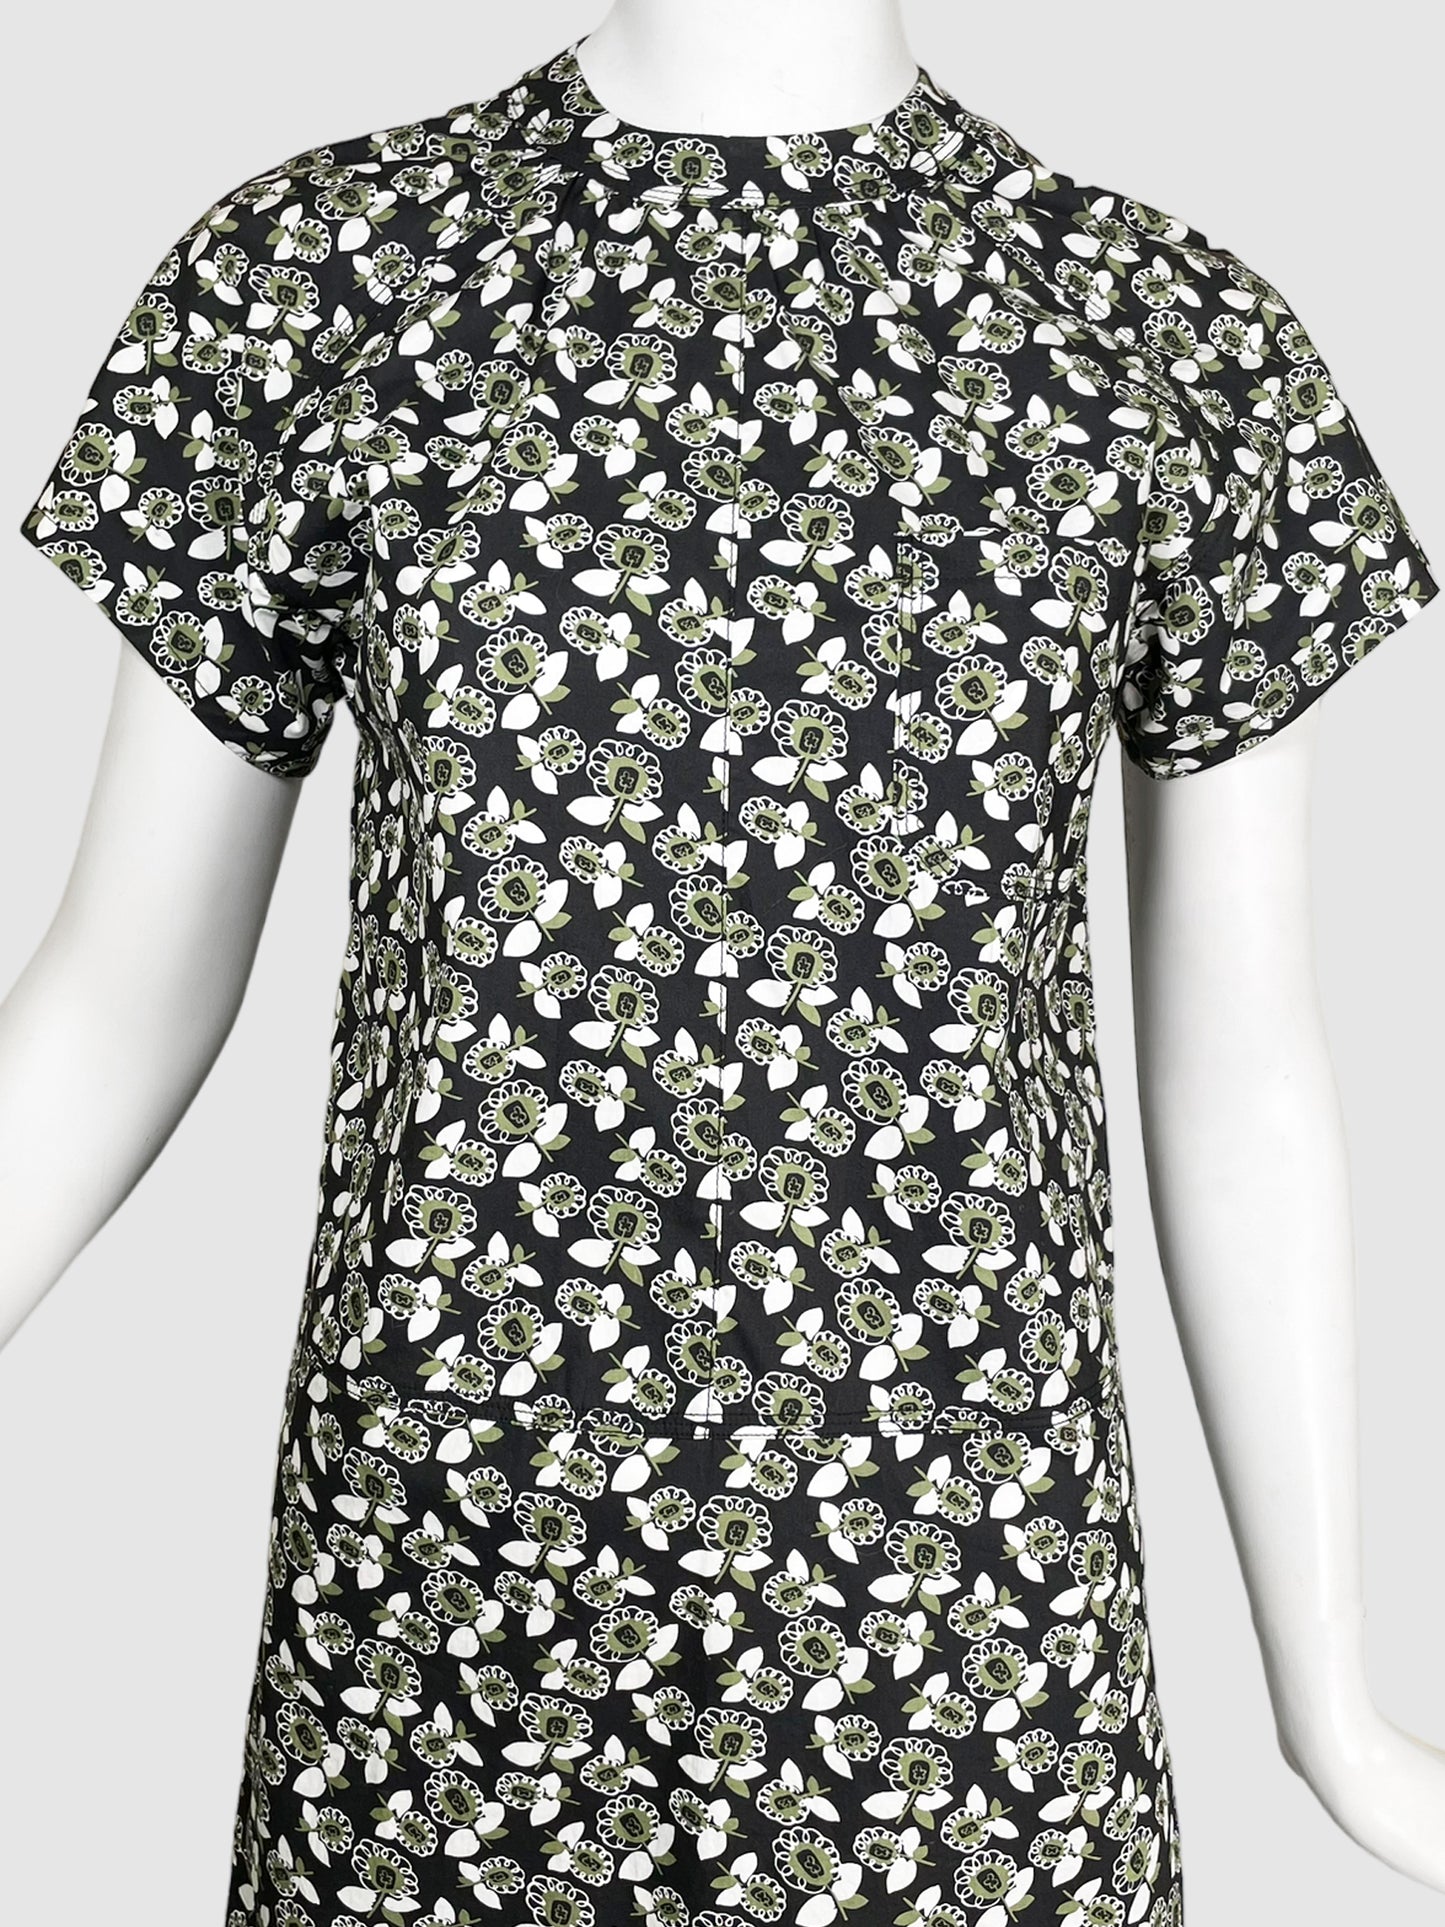 Marni Floral Print Short-Sleeve Dress - Size 38